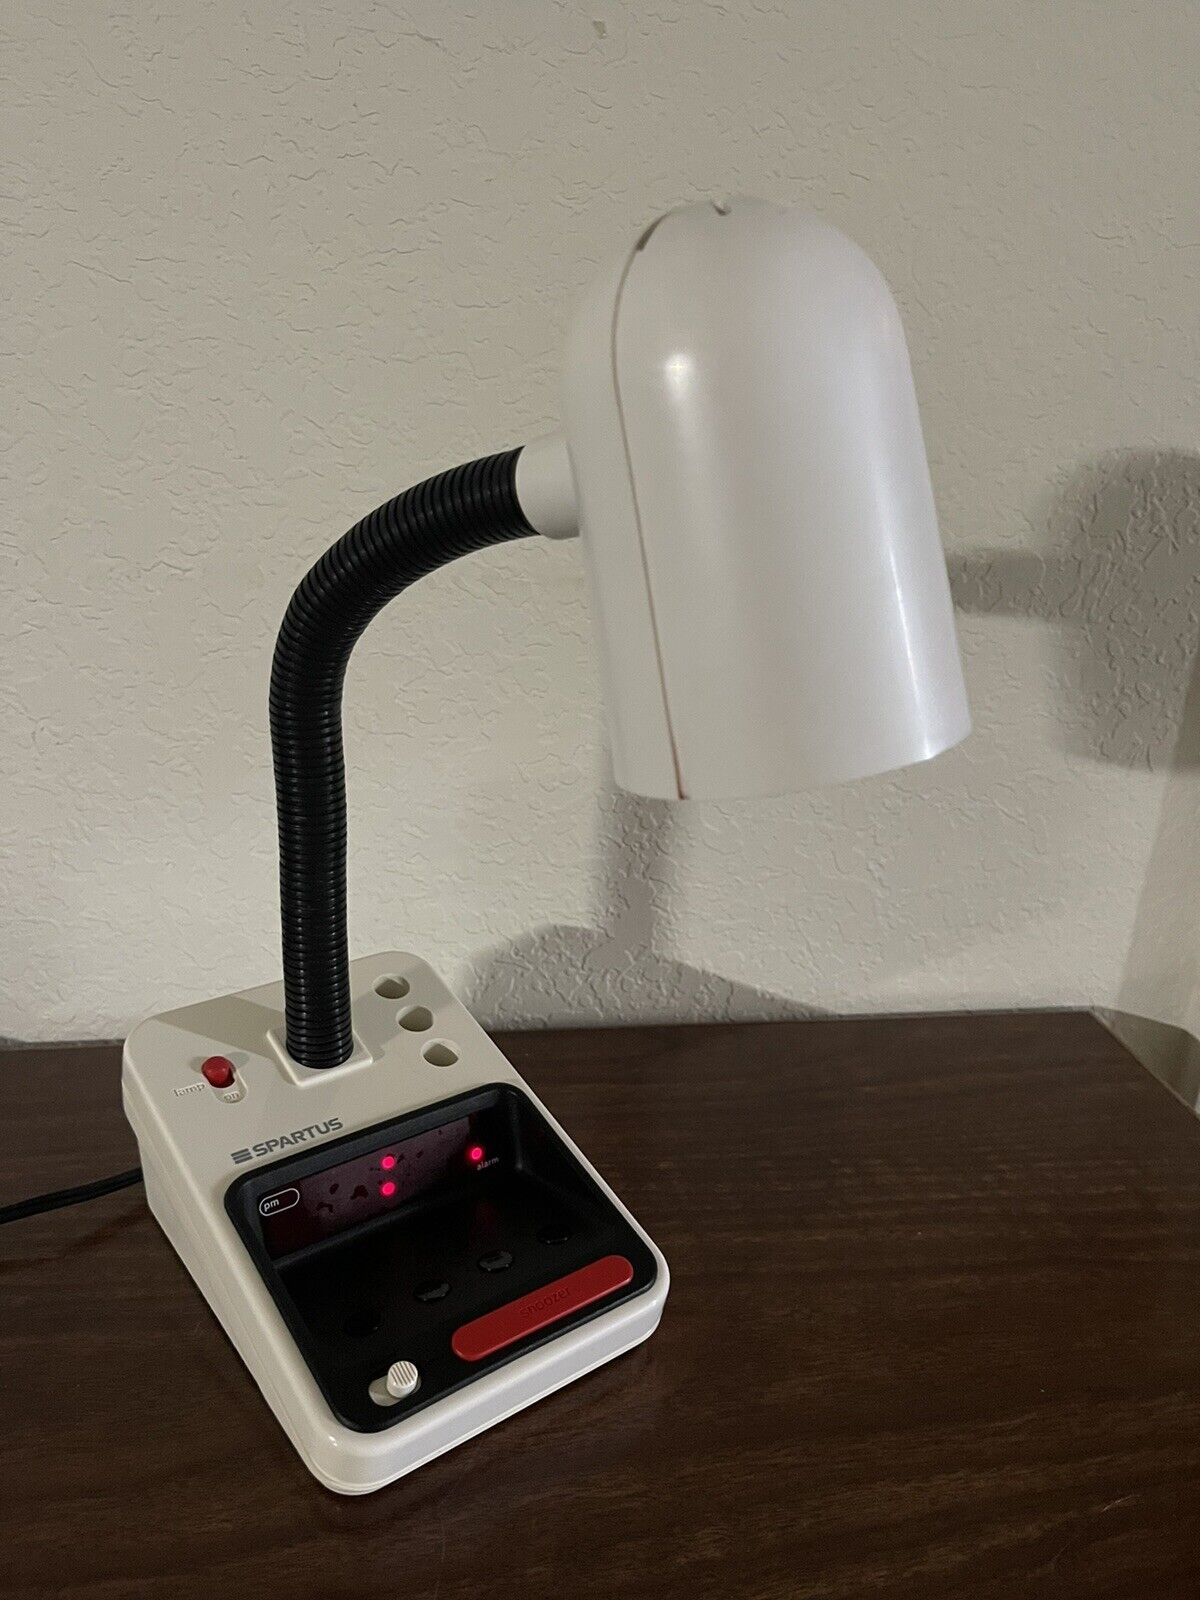 Vtg ‘80s - Spartus Desk Lamp Digital Alarm Clock Model 1182 Works Great